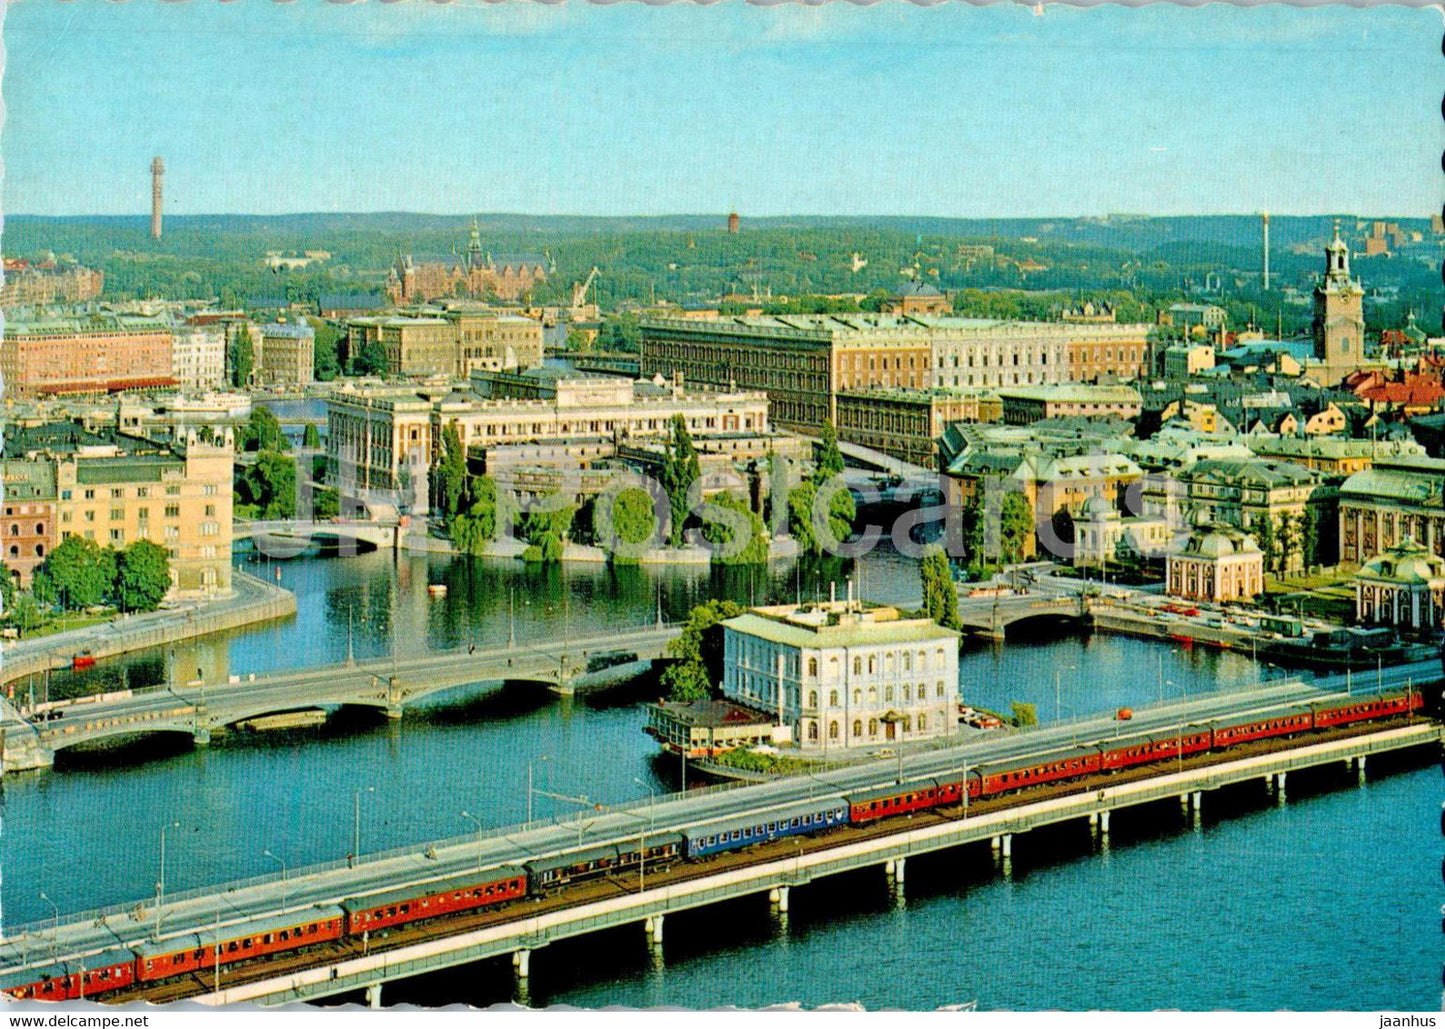 Stockholm - Stadshustornet over Kungl Slottet och Riksdagshuset - bridge - train - railway 1982 - Sweden - used - JH Postcards